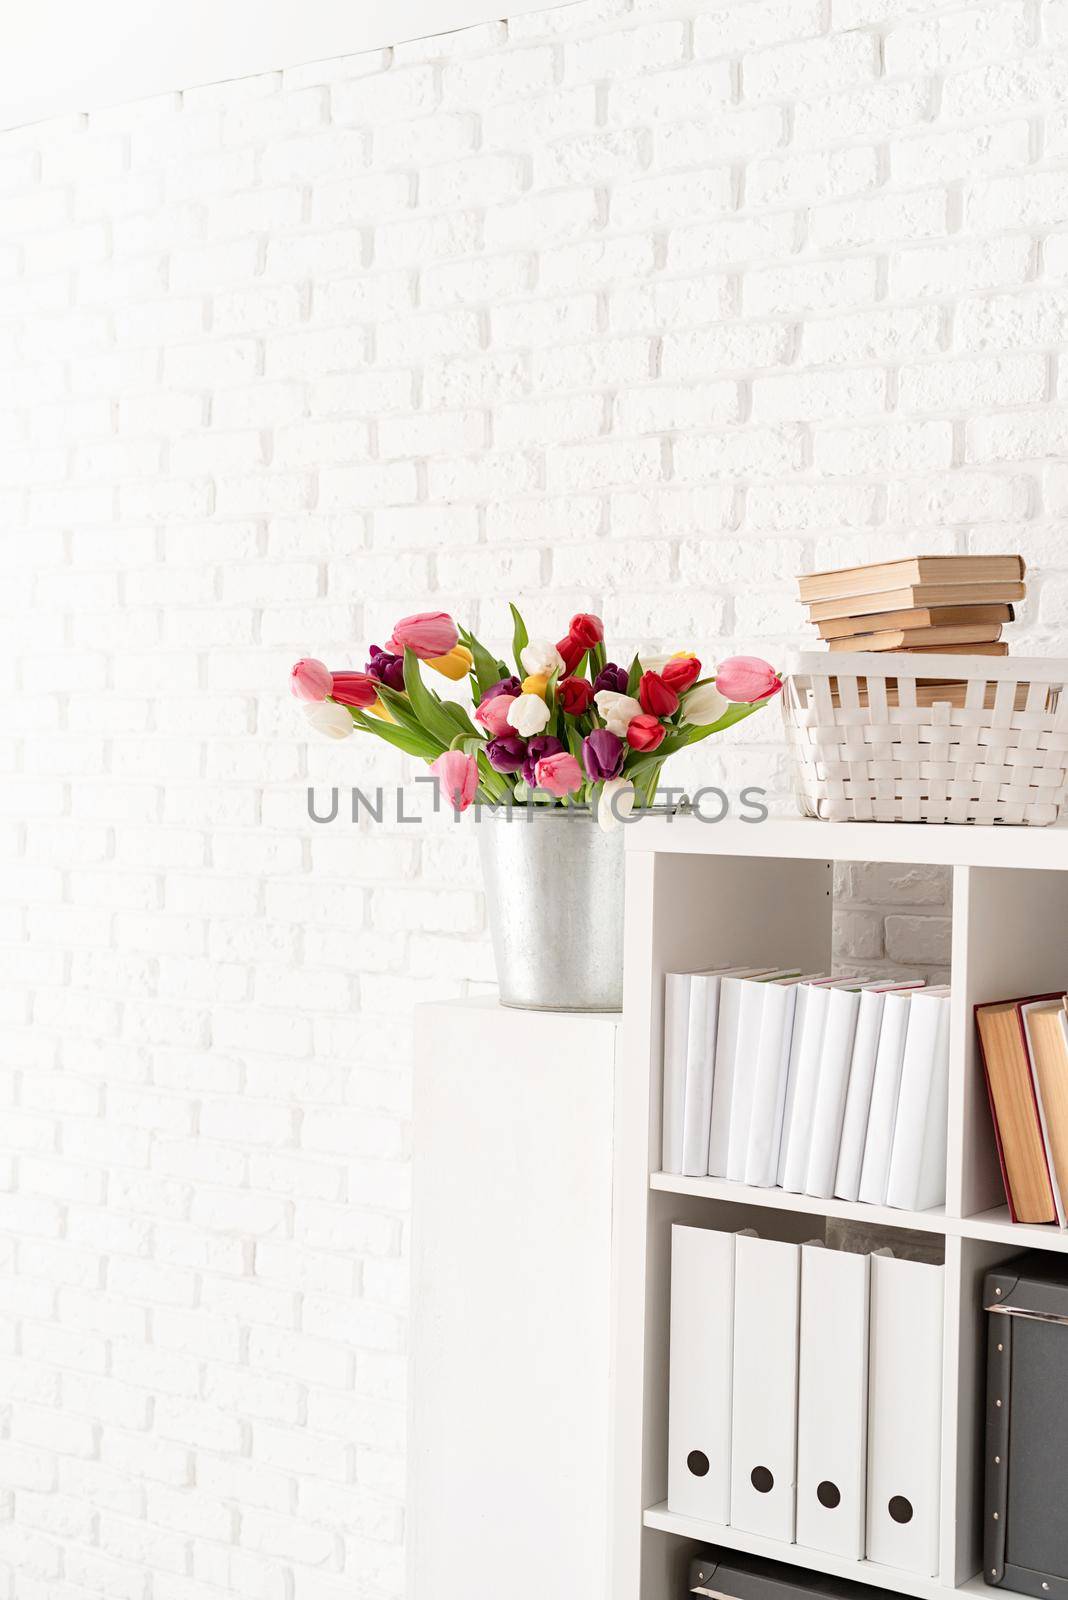 Bucket of fresh tulip flowers next to the bookshelf over white brick wall background